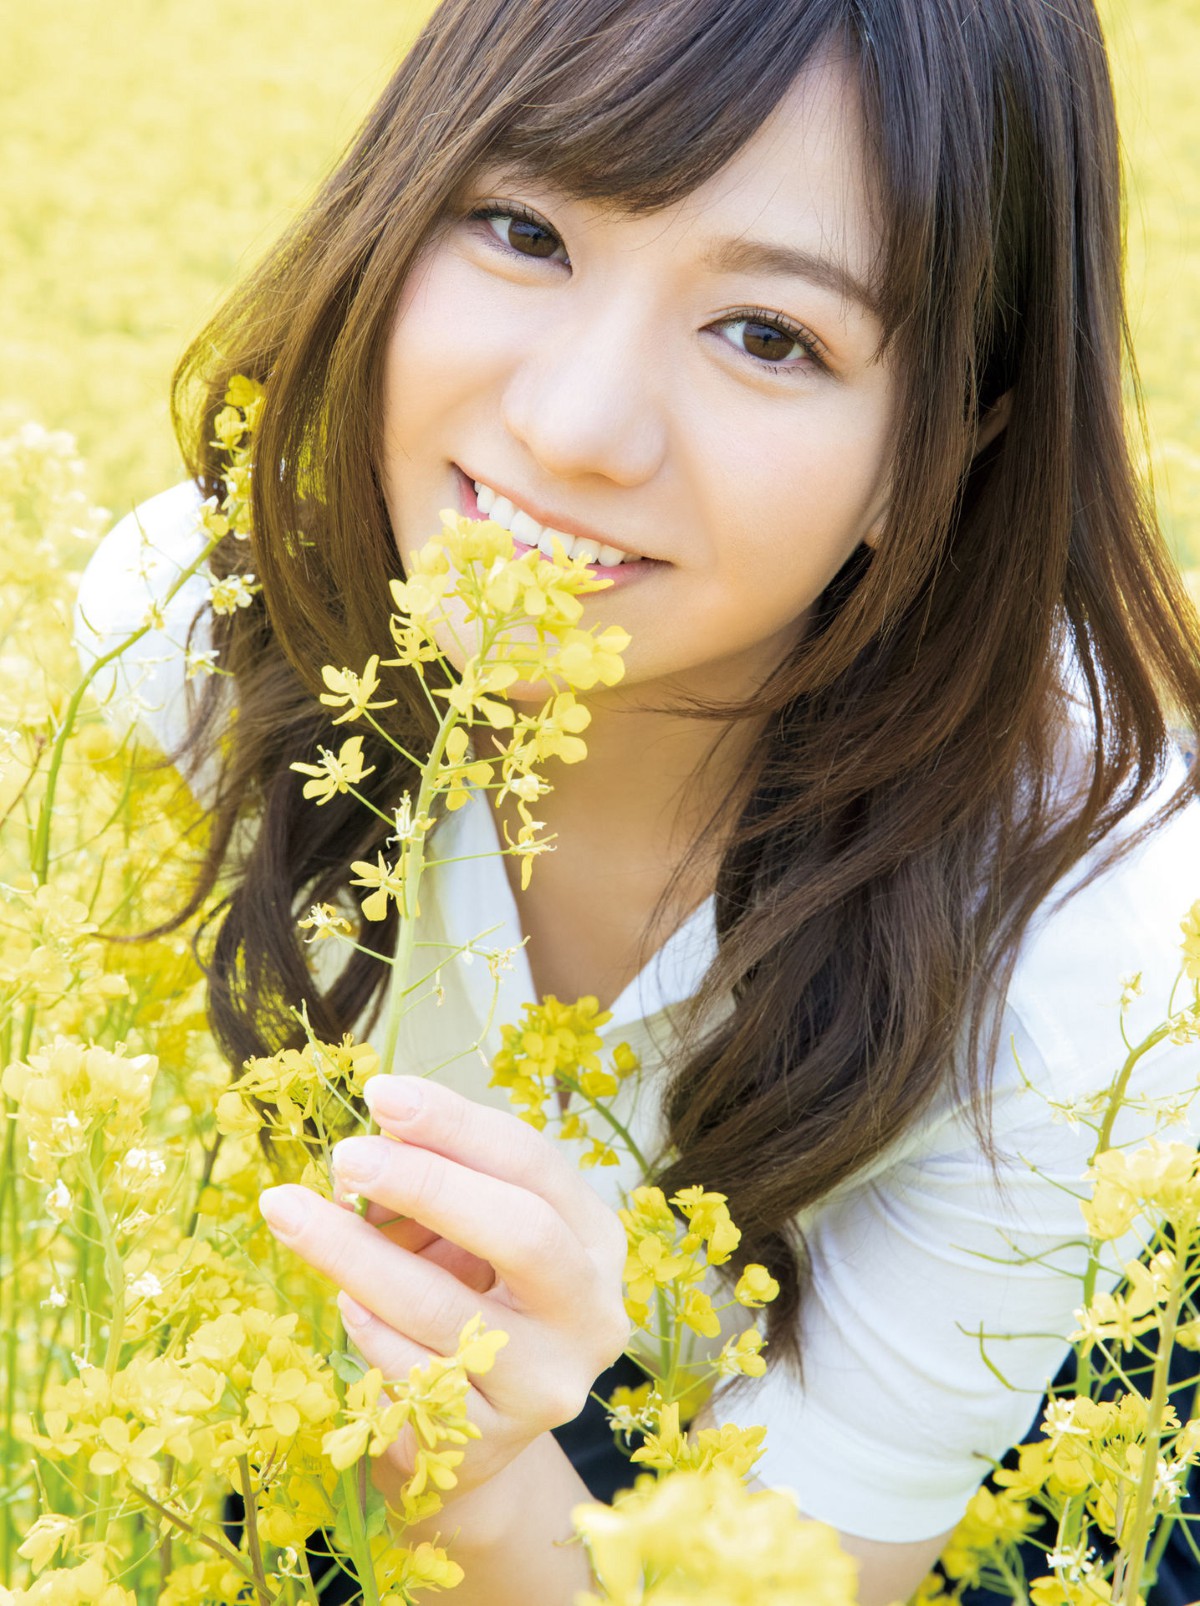 Photobook Rina Fujisaki 藤崎里菜 Blossom No Watermark 0059 9657765973.jpg